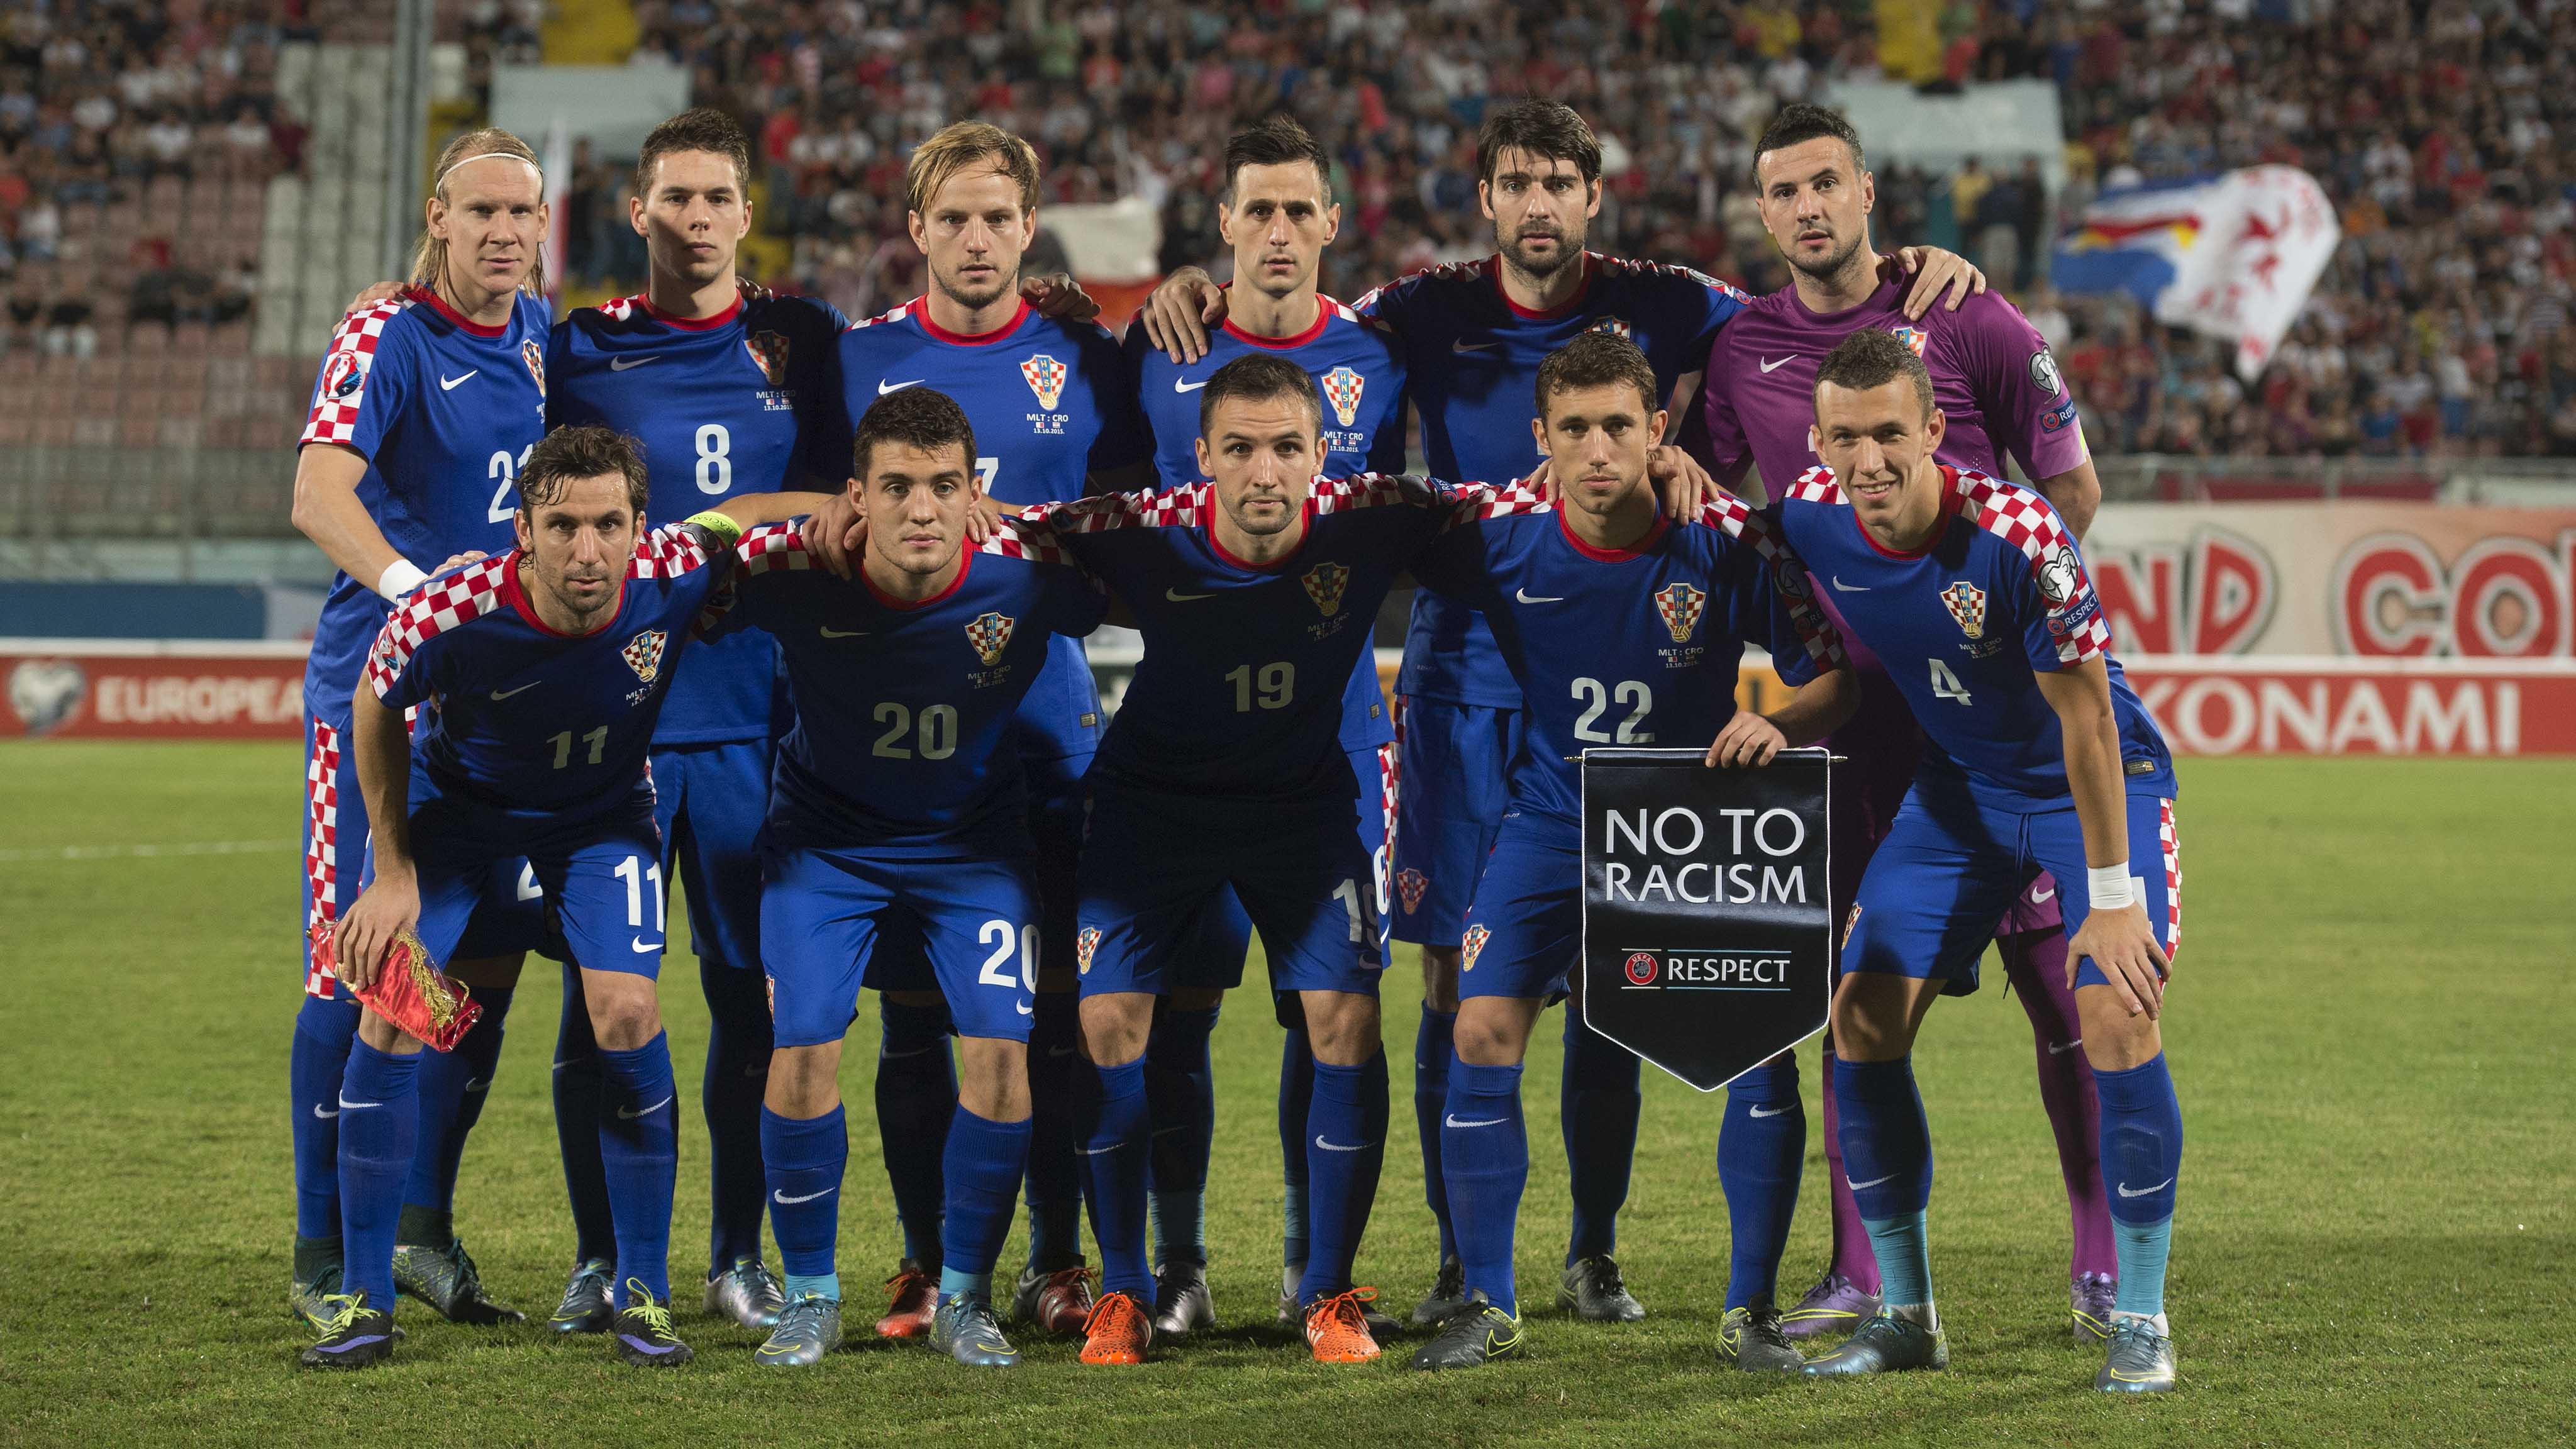 Rezultate imazhesh për Croatia nacional team futboll 2016